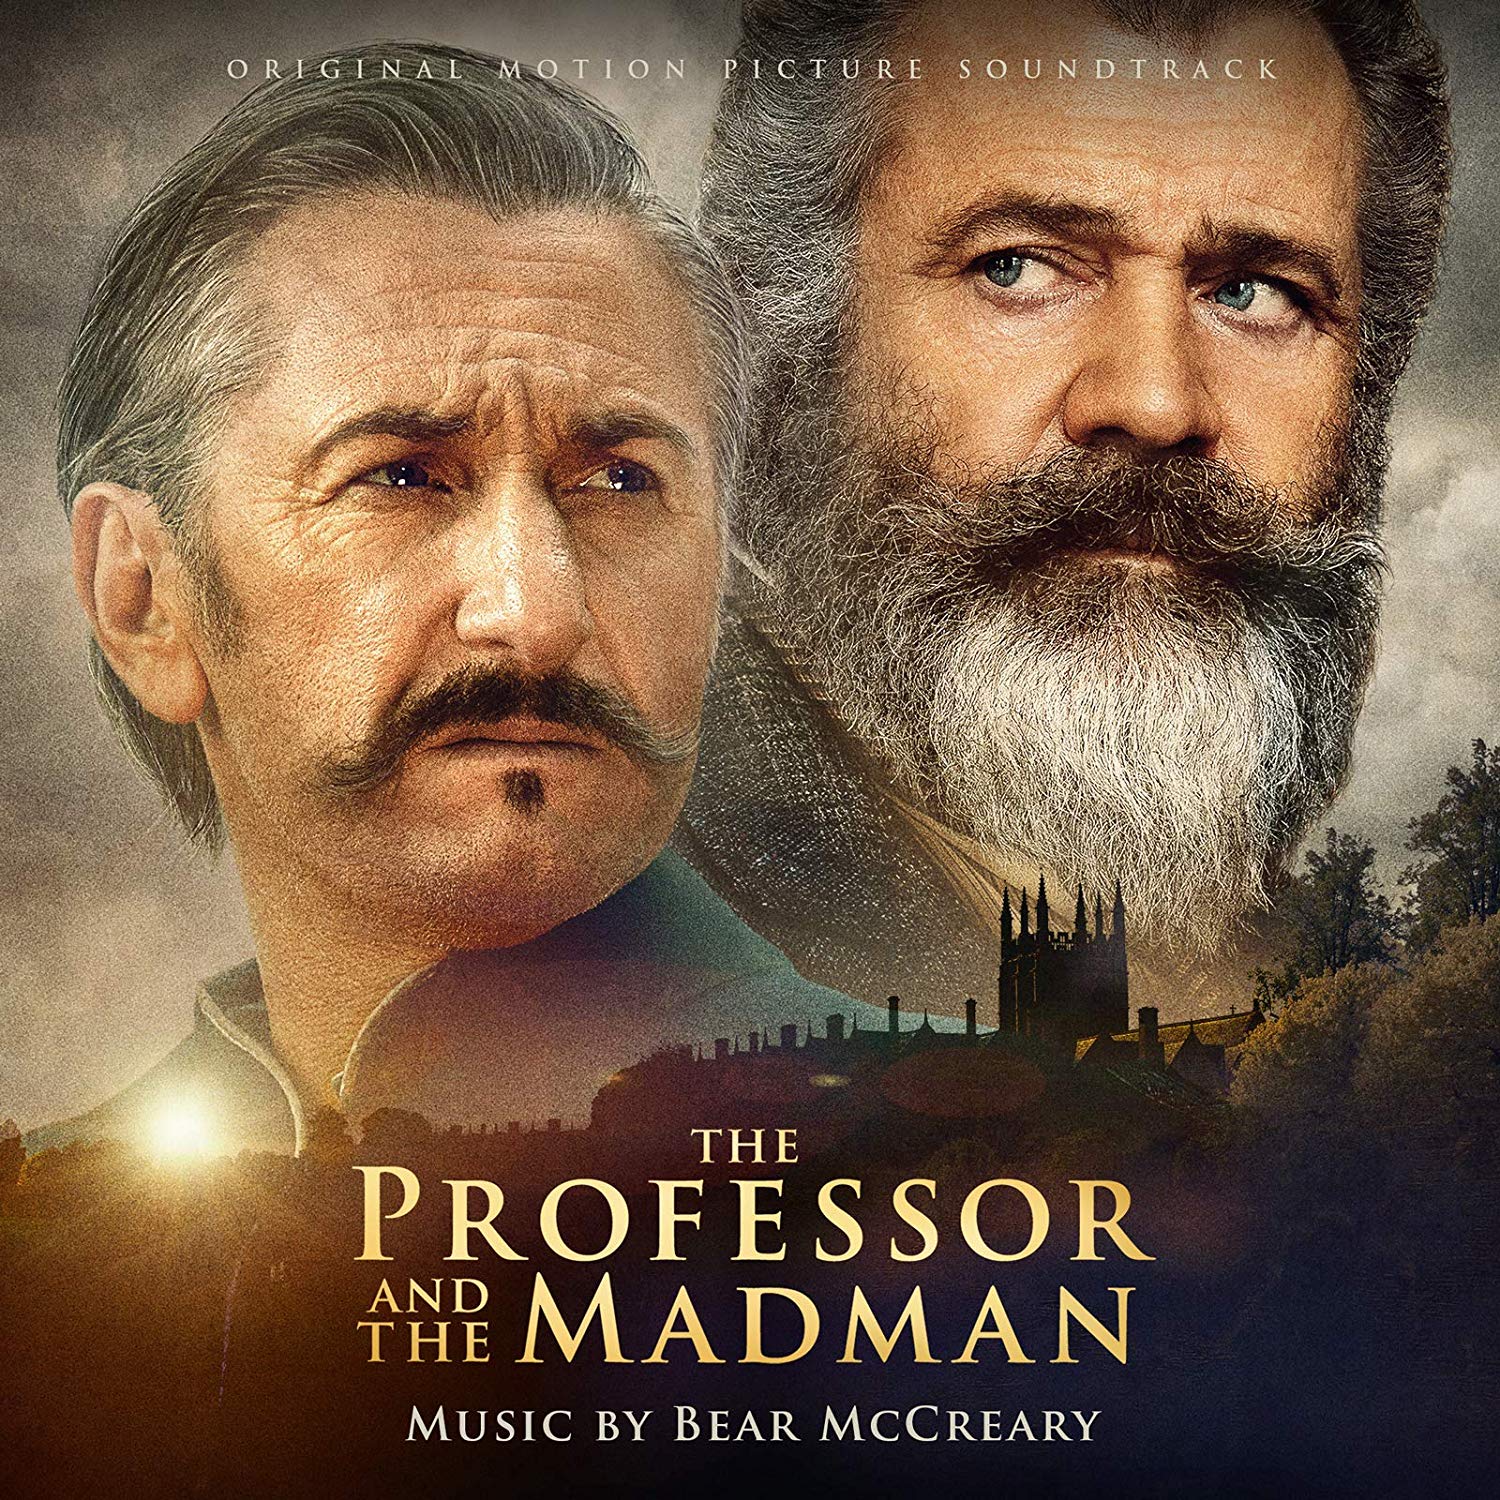 The Professor And The Mandman